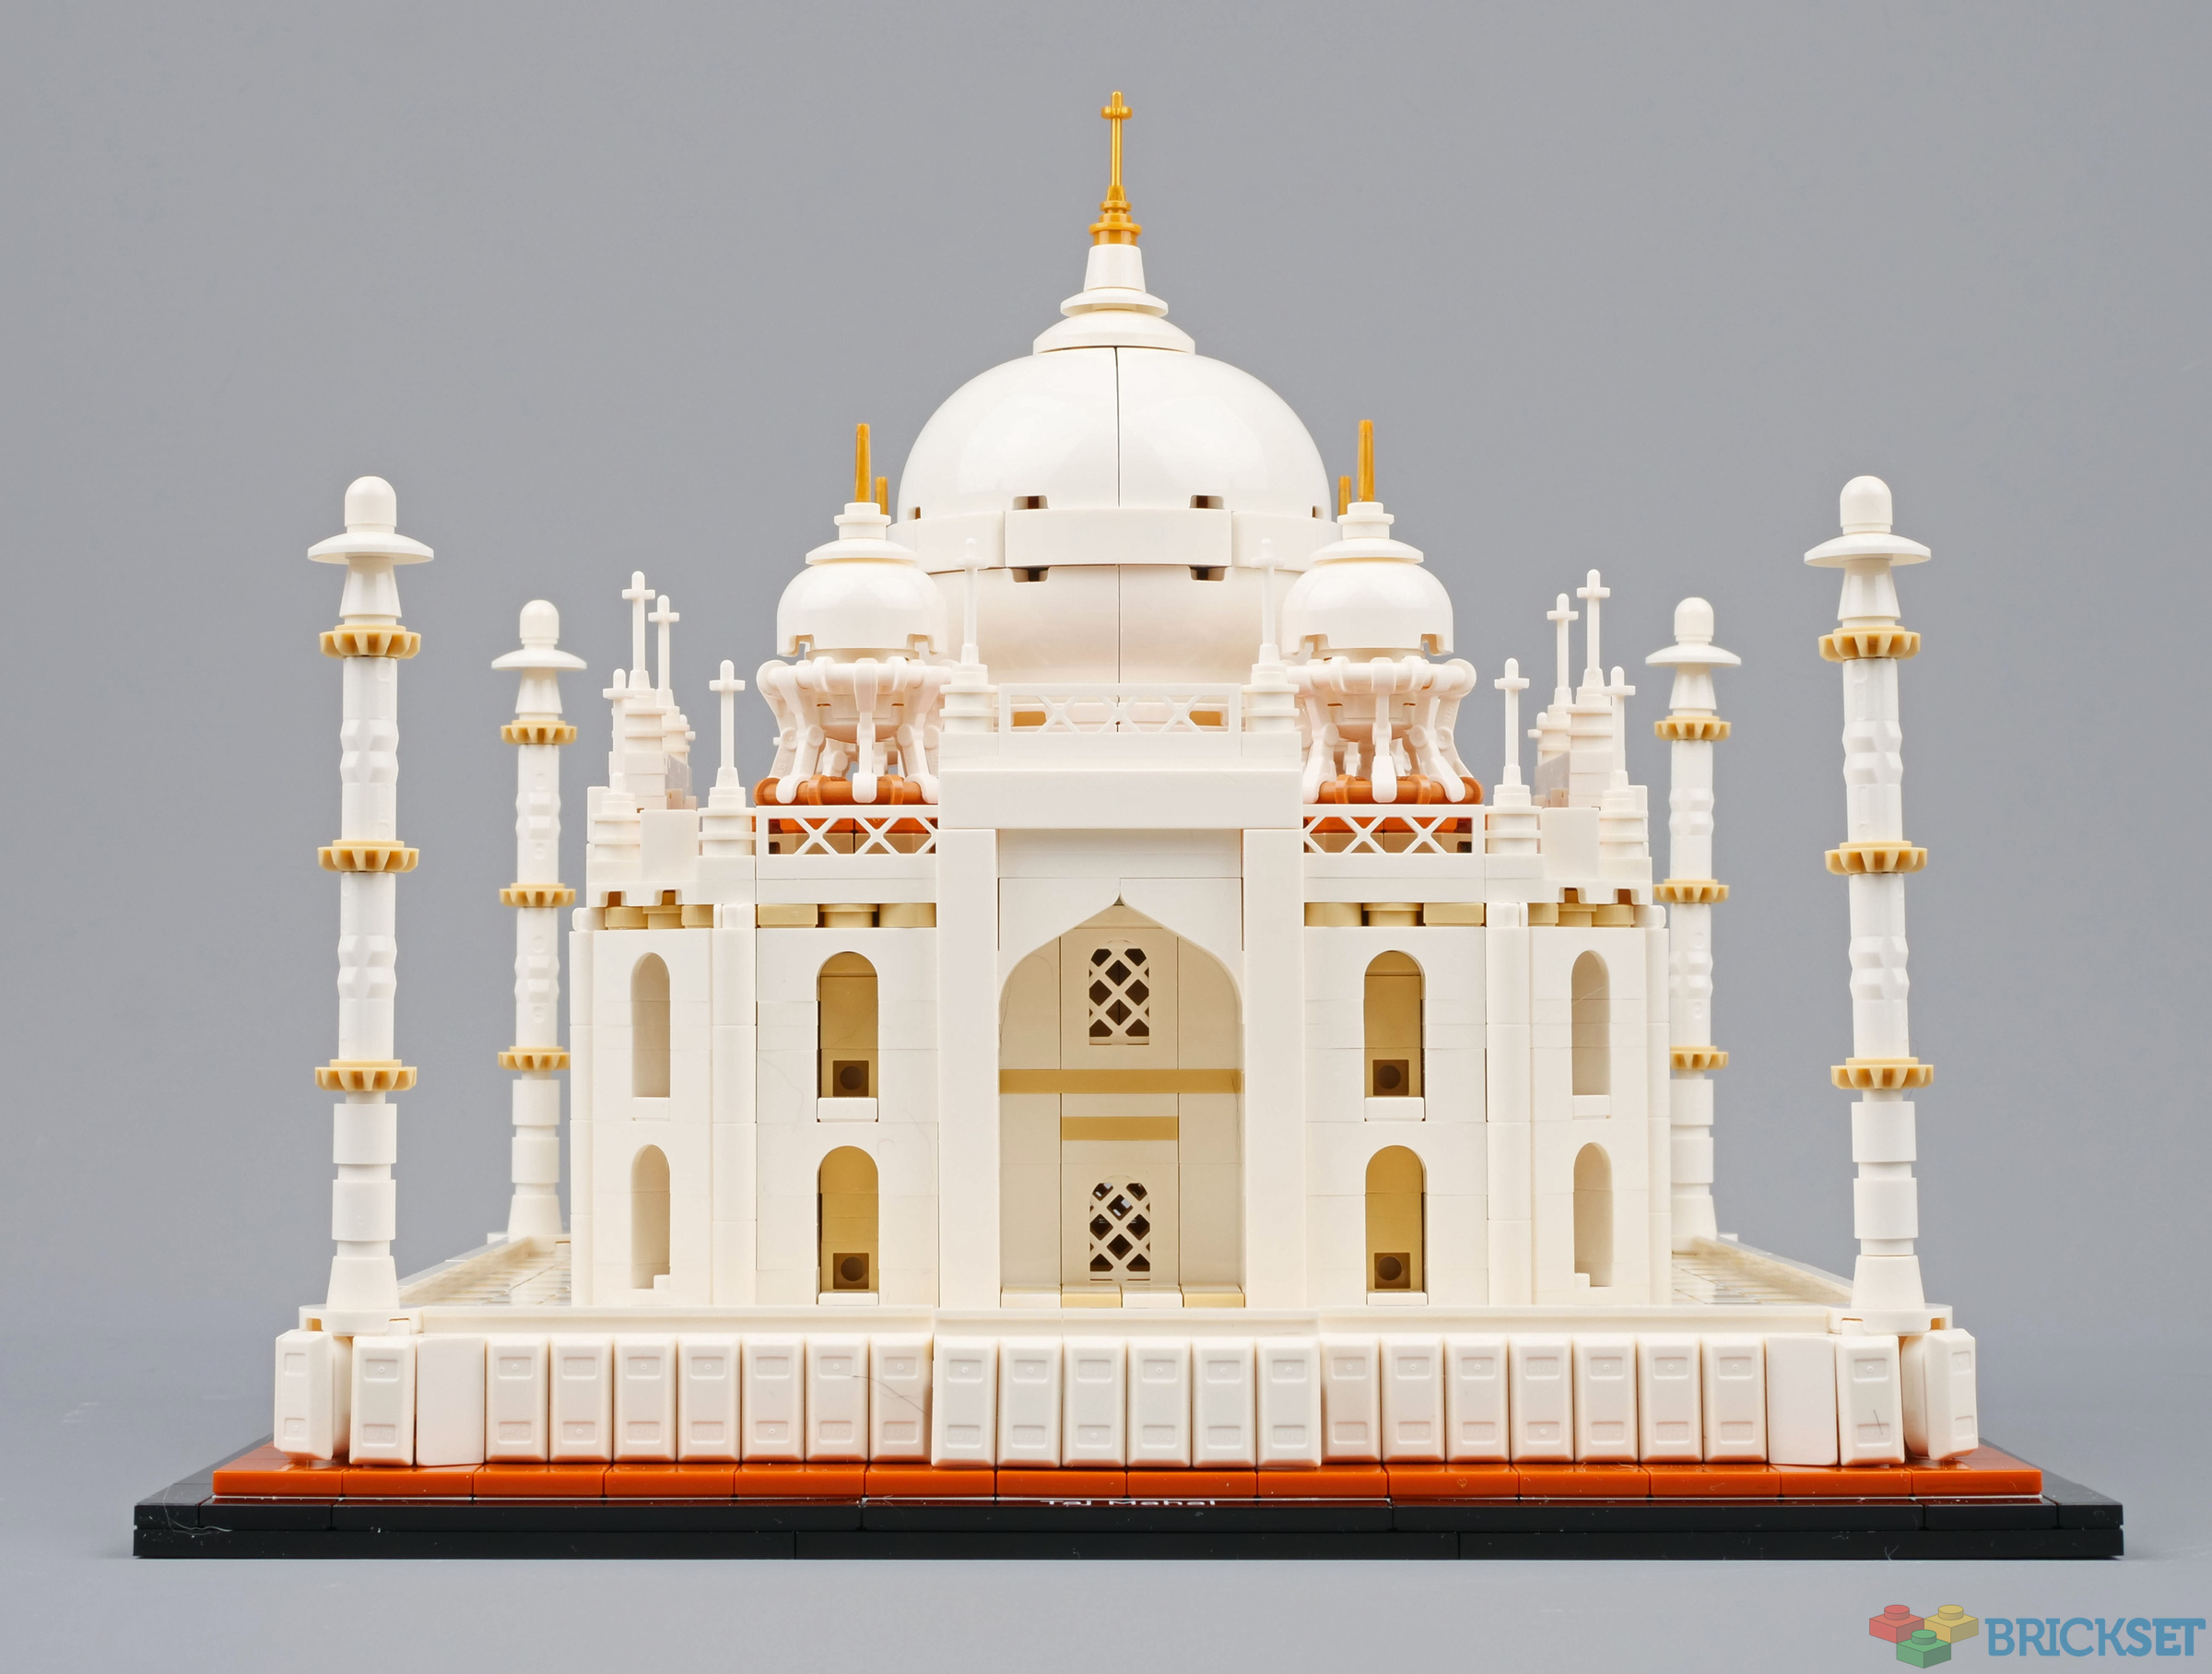 LEGO 21056 Taj Mahal review